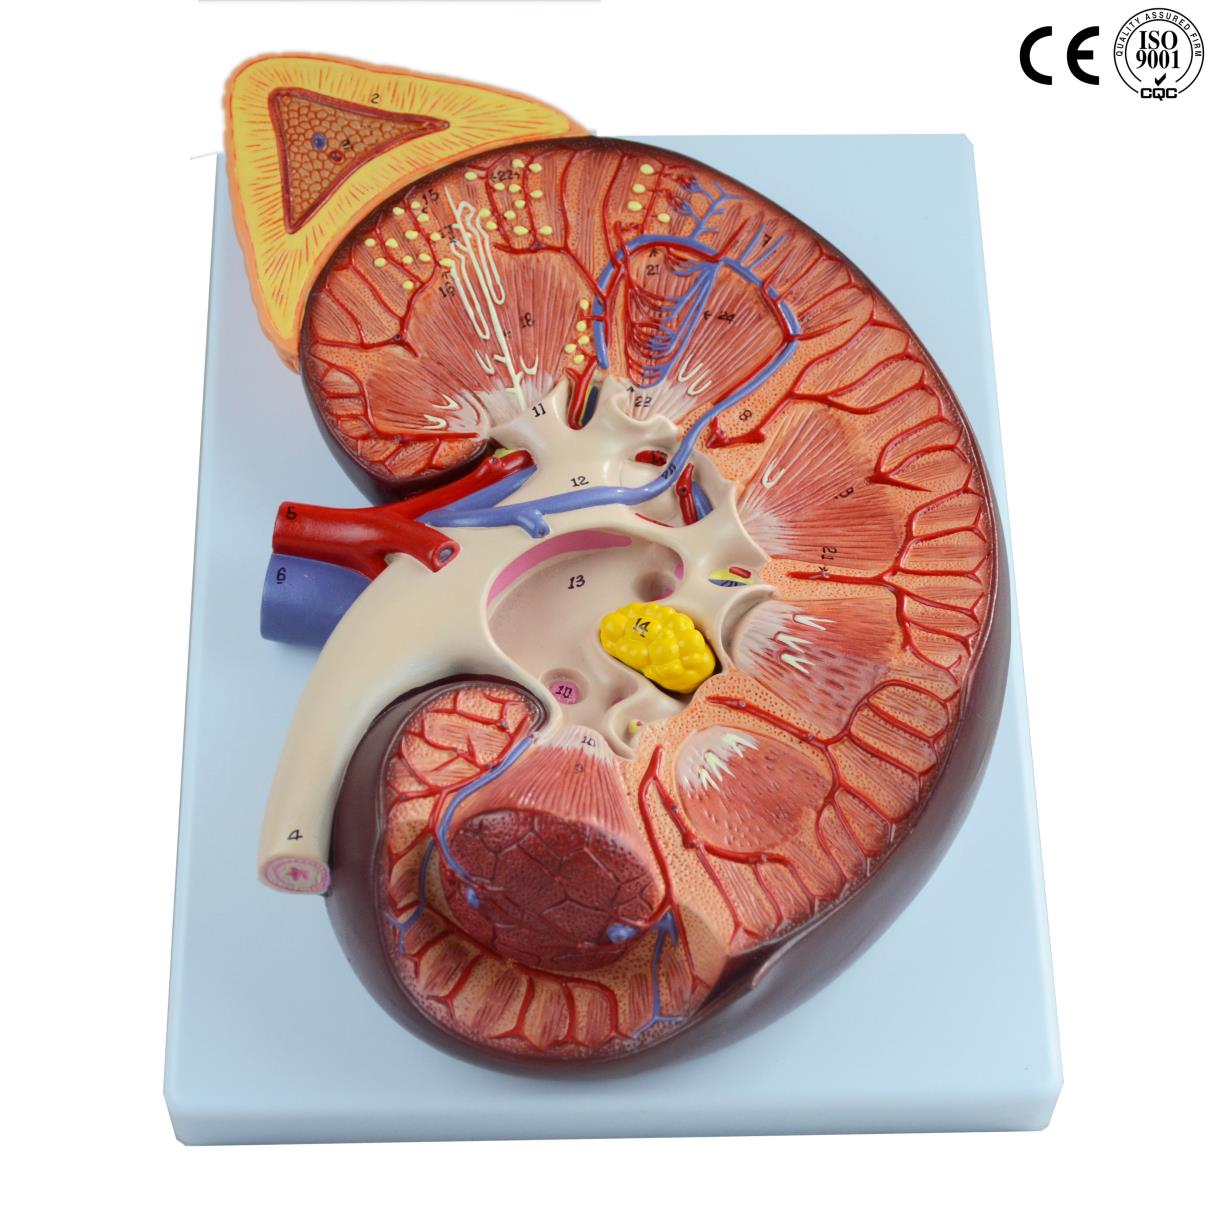 adrenal gland kidney